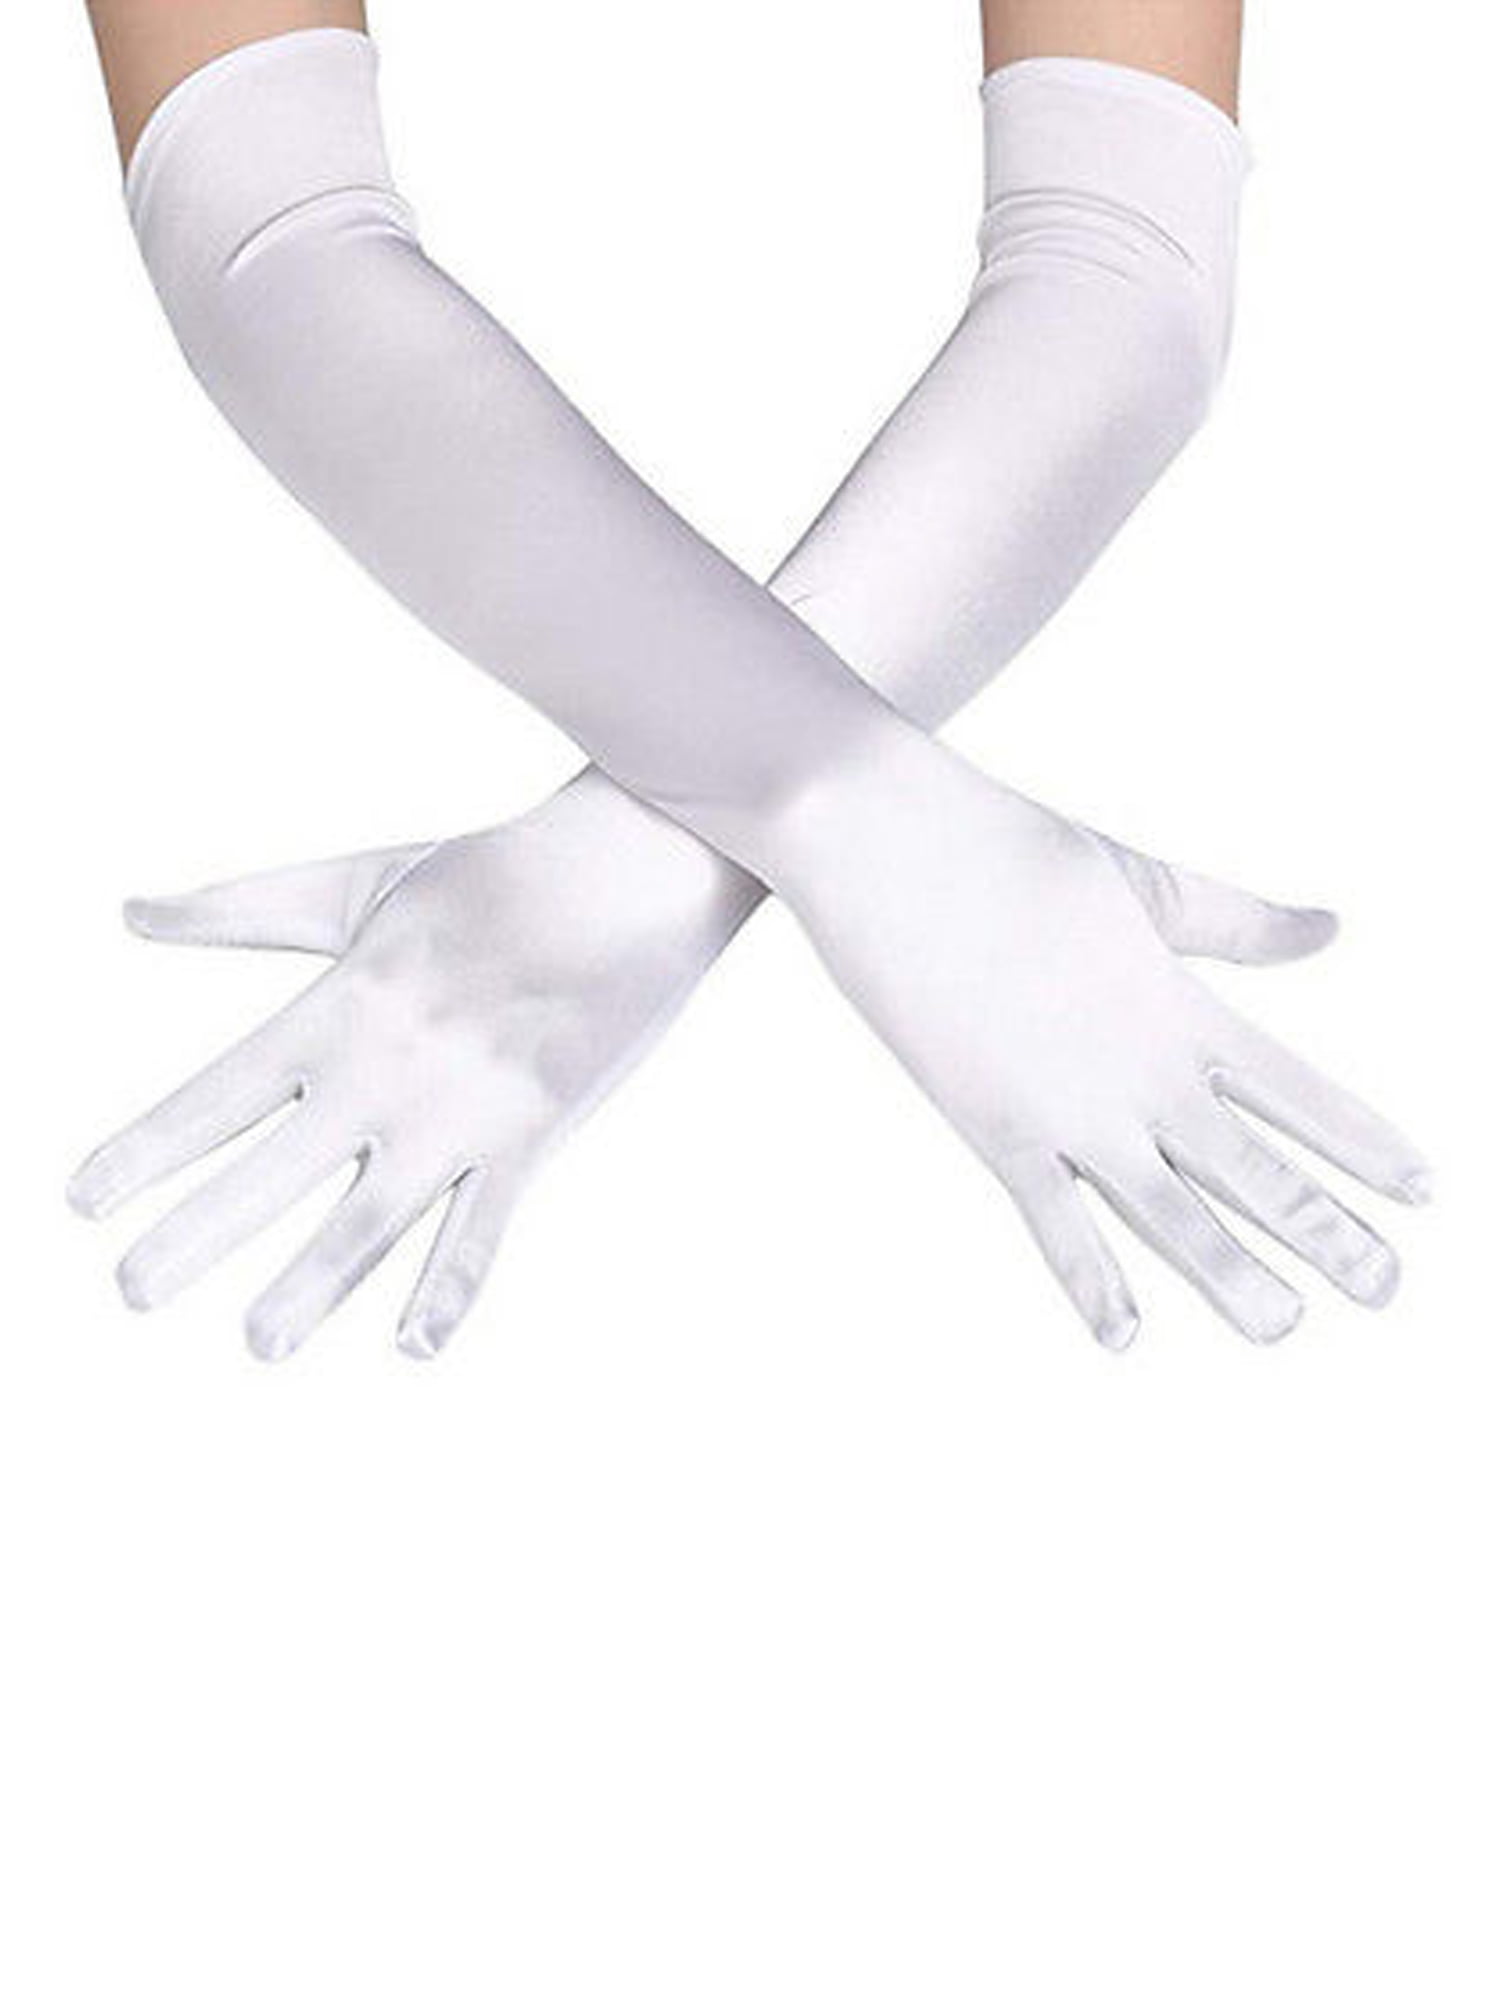 23" Long Stretch Satin Opera Glove With Spandex.Bridal Wedding.Prom.Halloween. 